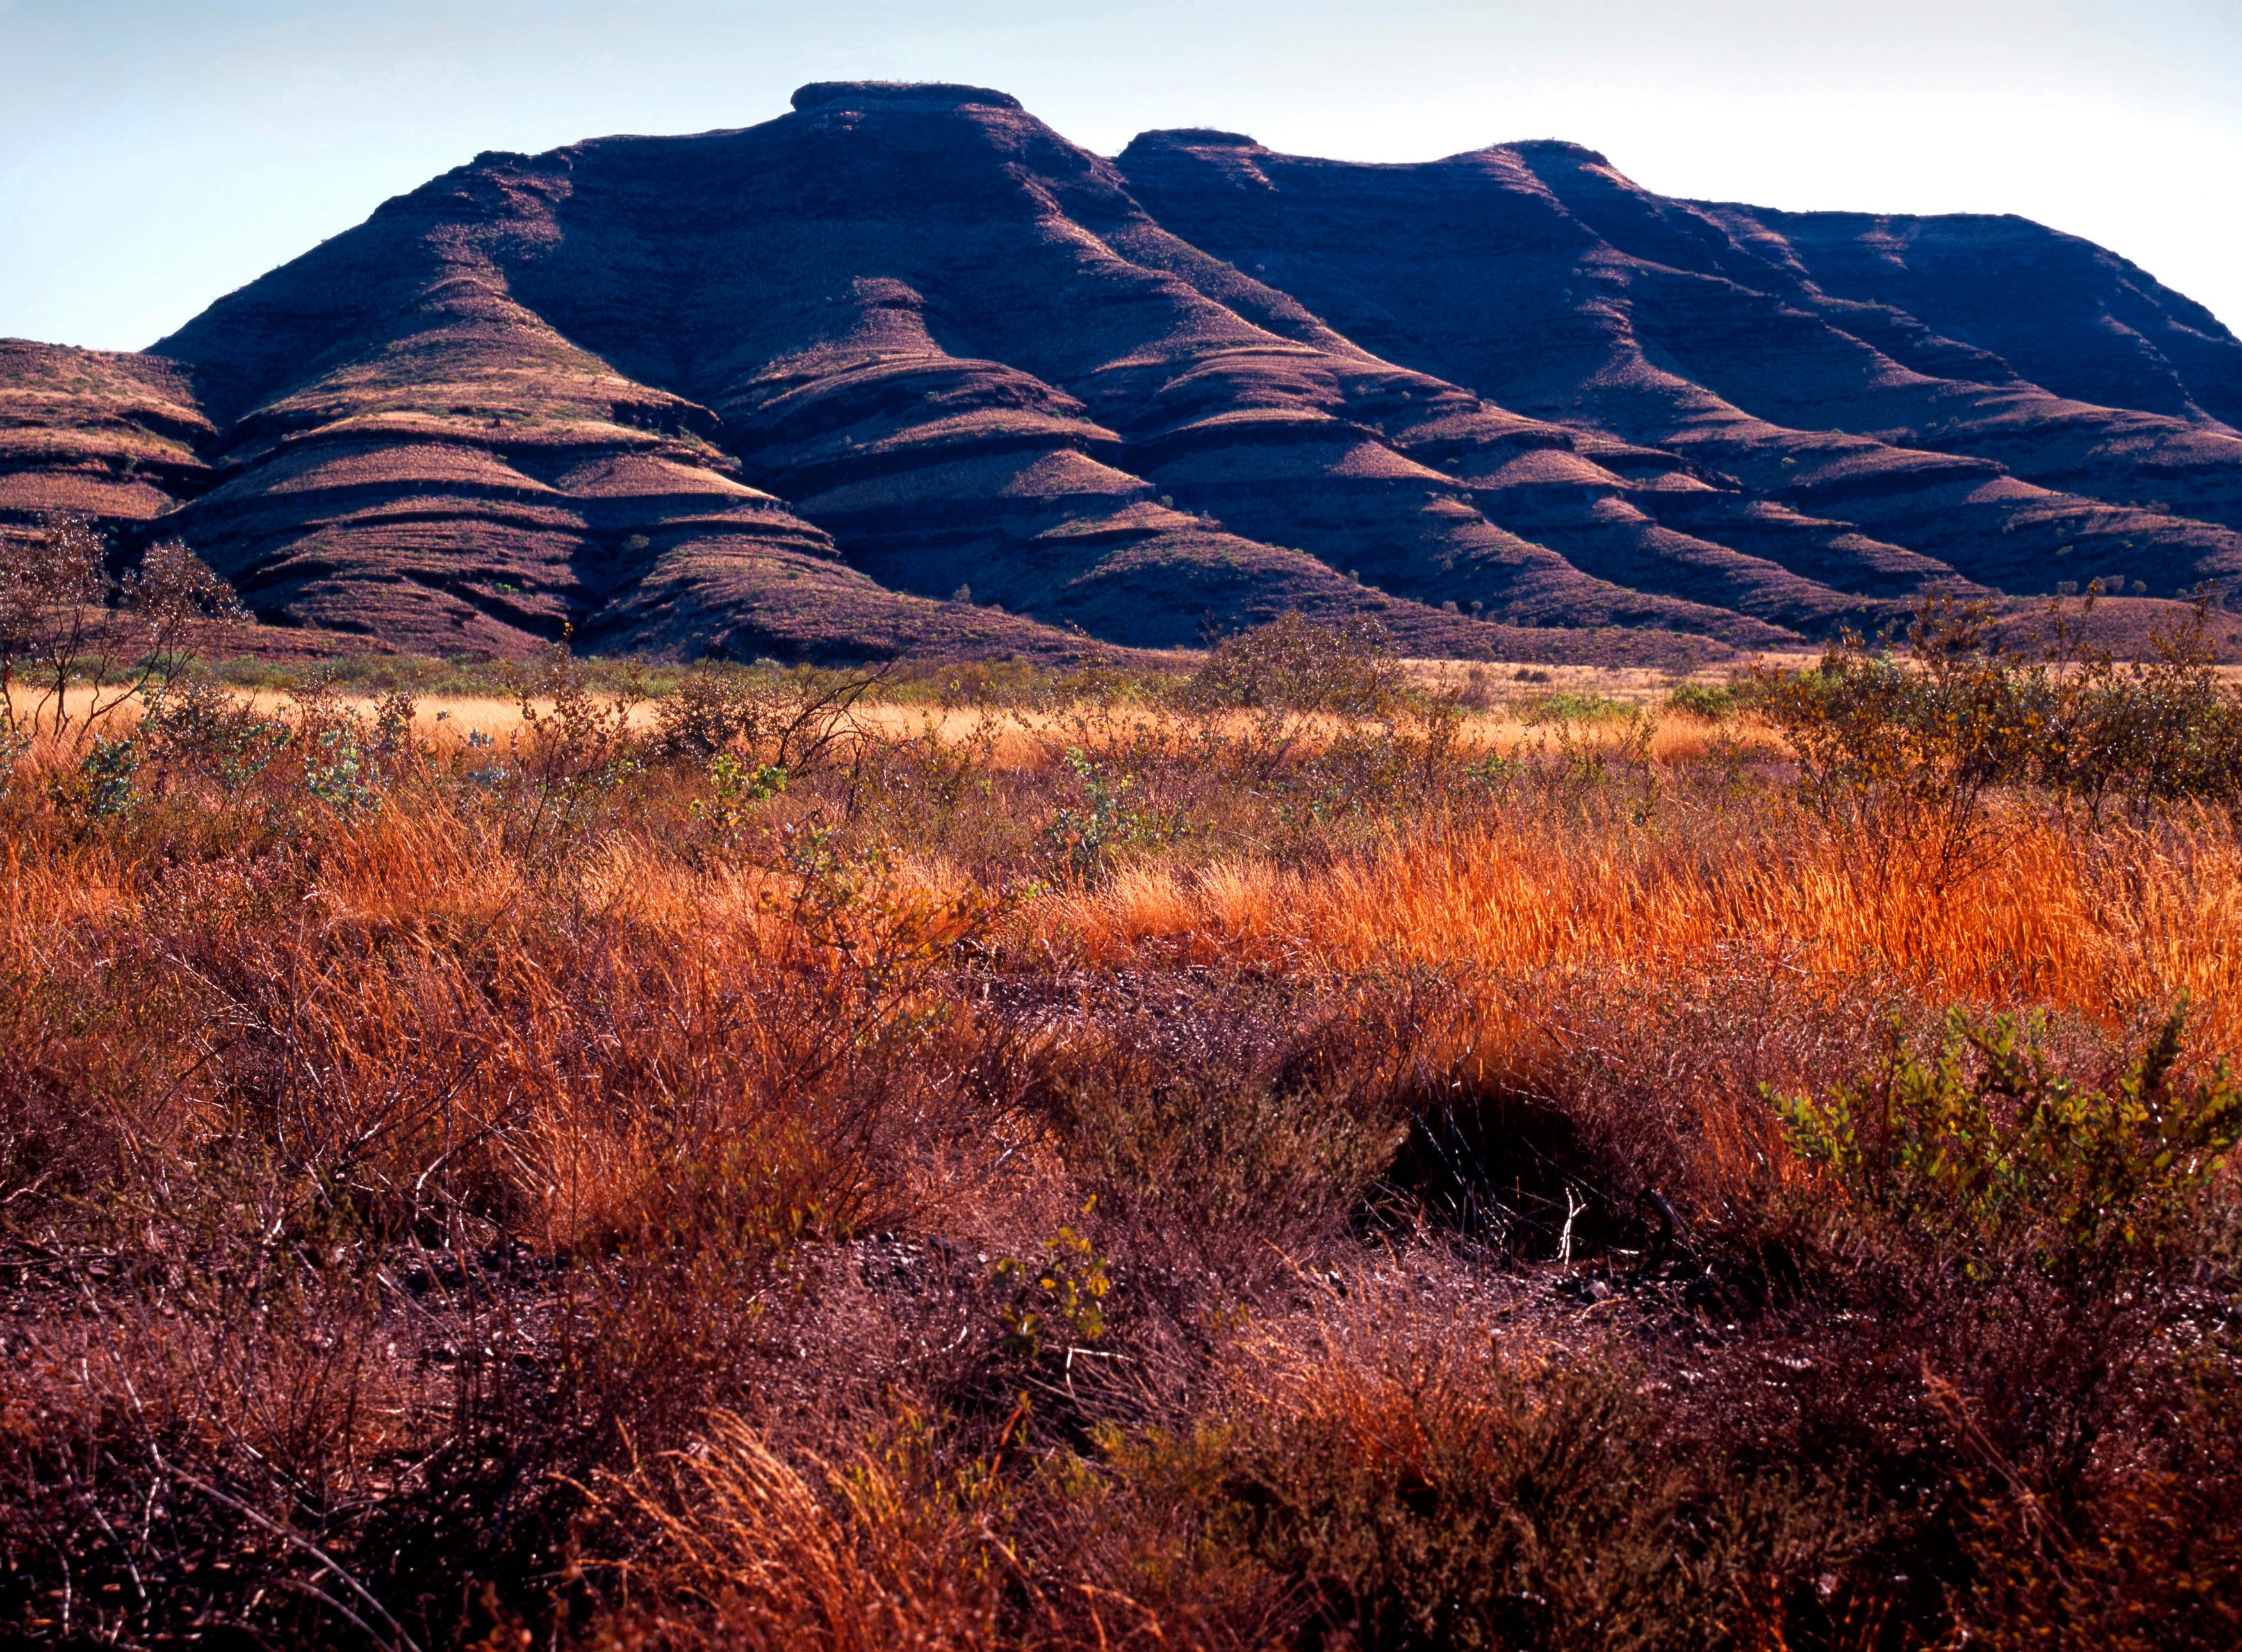 Western Australia - the Hamersley Ranges and dense bush seen from Wittenoom, Karijini national park, Pilbara